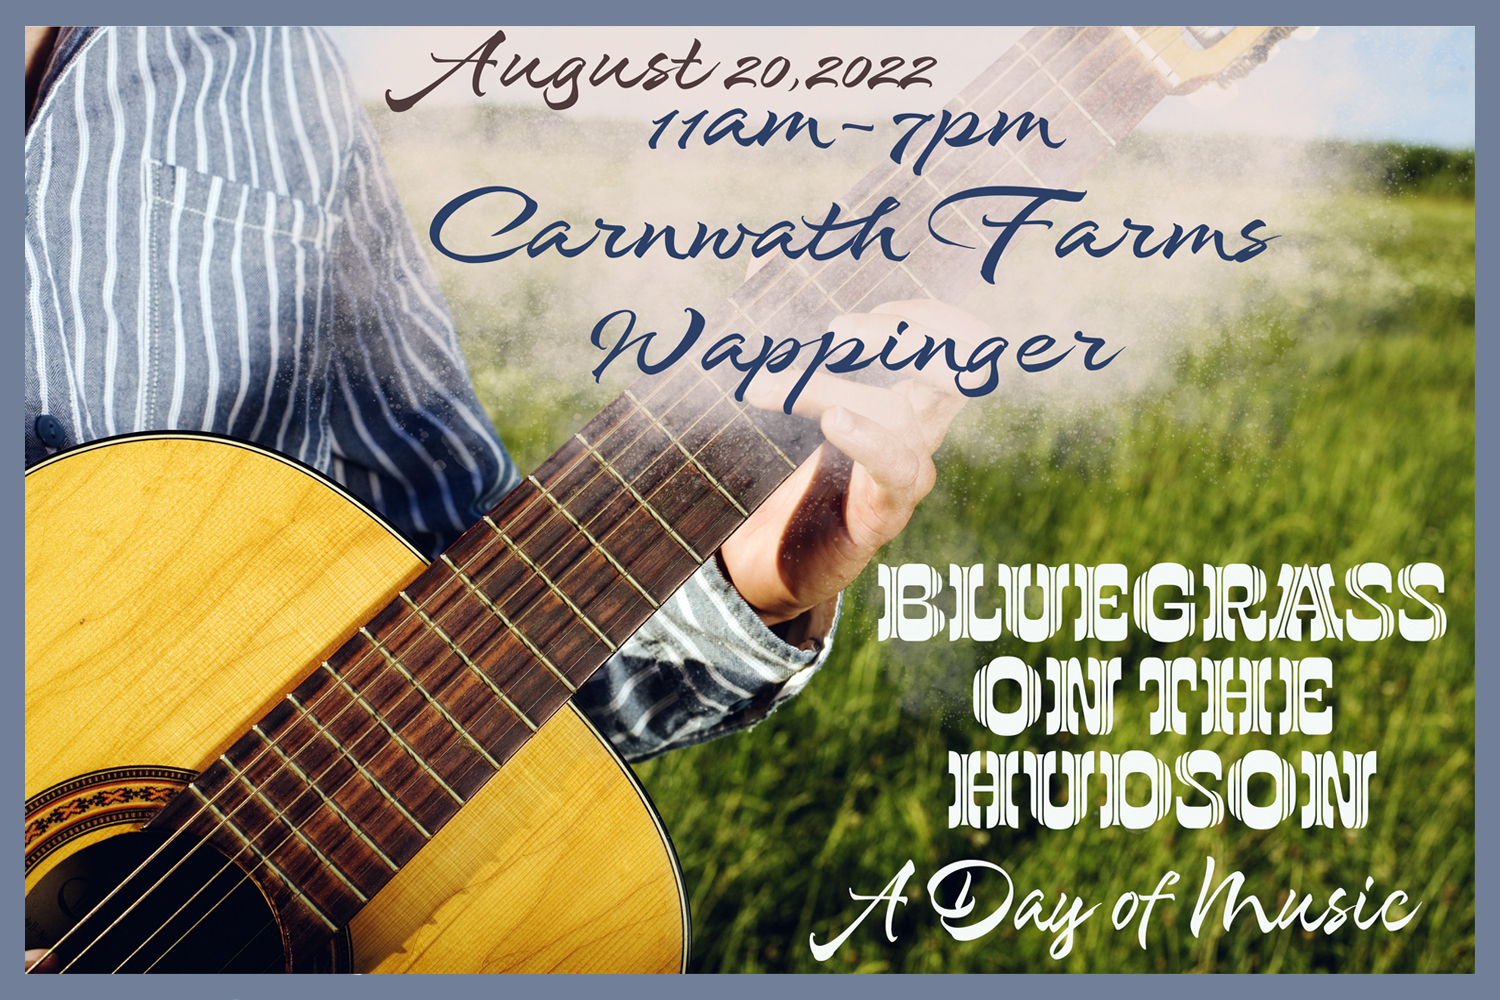 Bluegrass Festival at Carnwath Farms